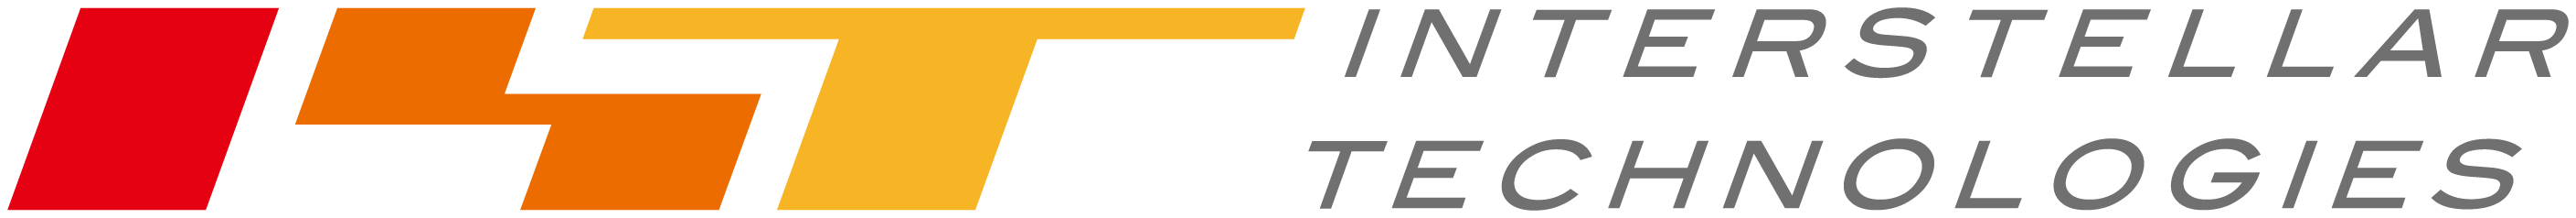 Interstellar Technologies  logo